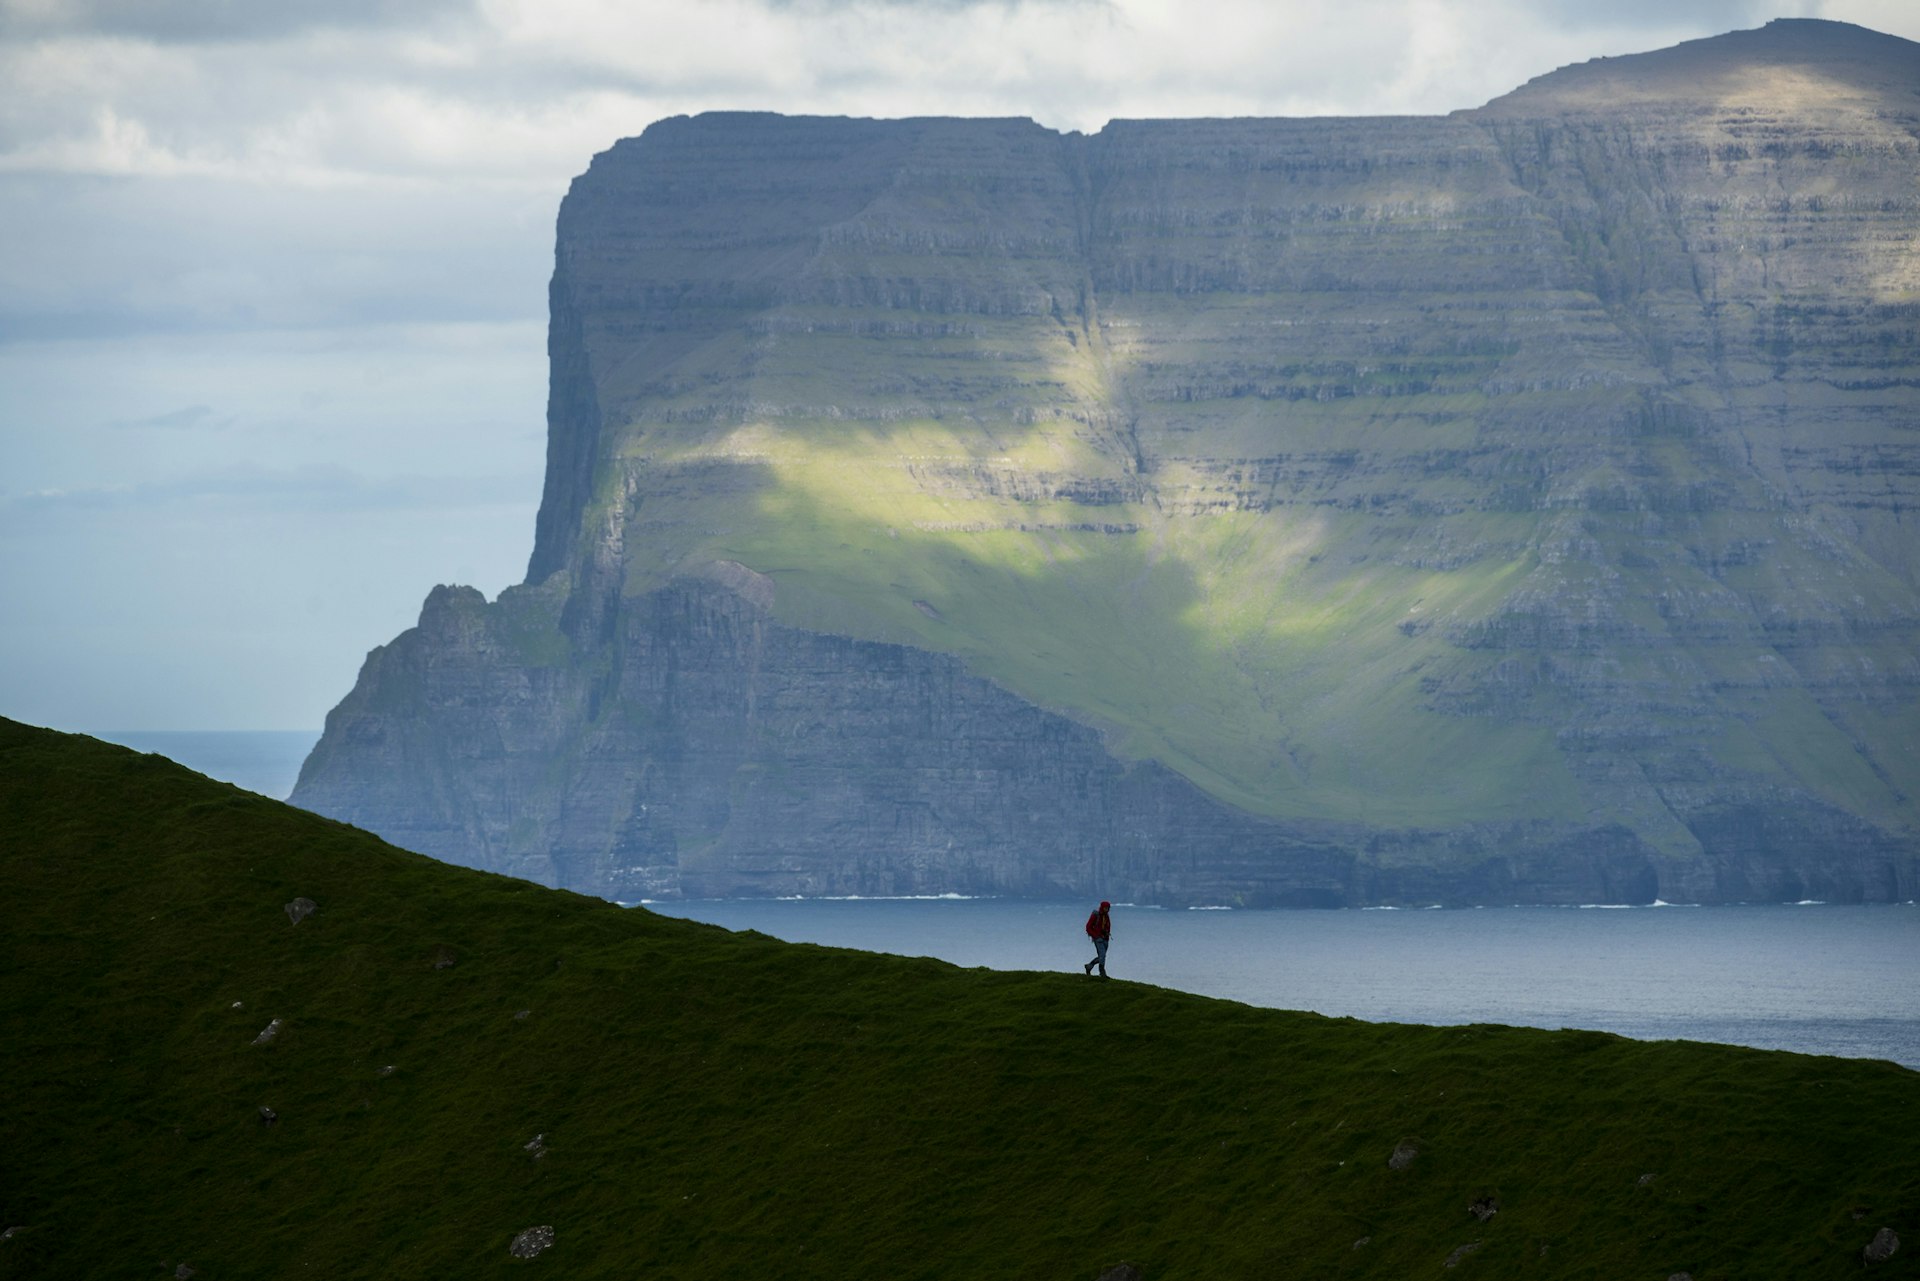 A hiker on a mountain ridge looks towards majestic cliffs 